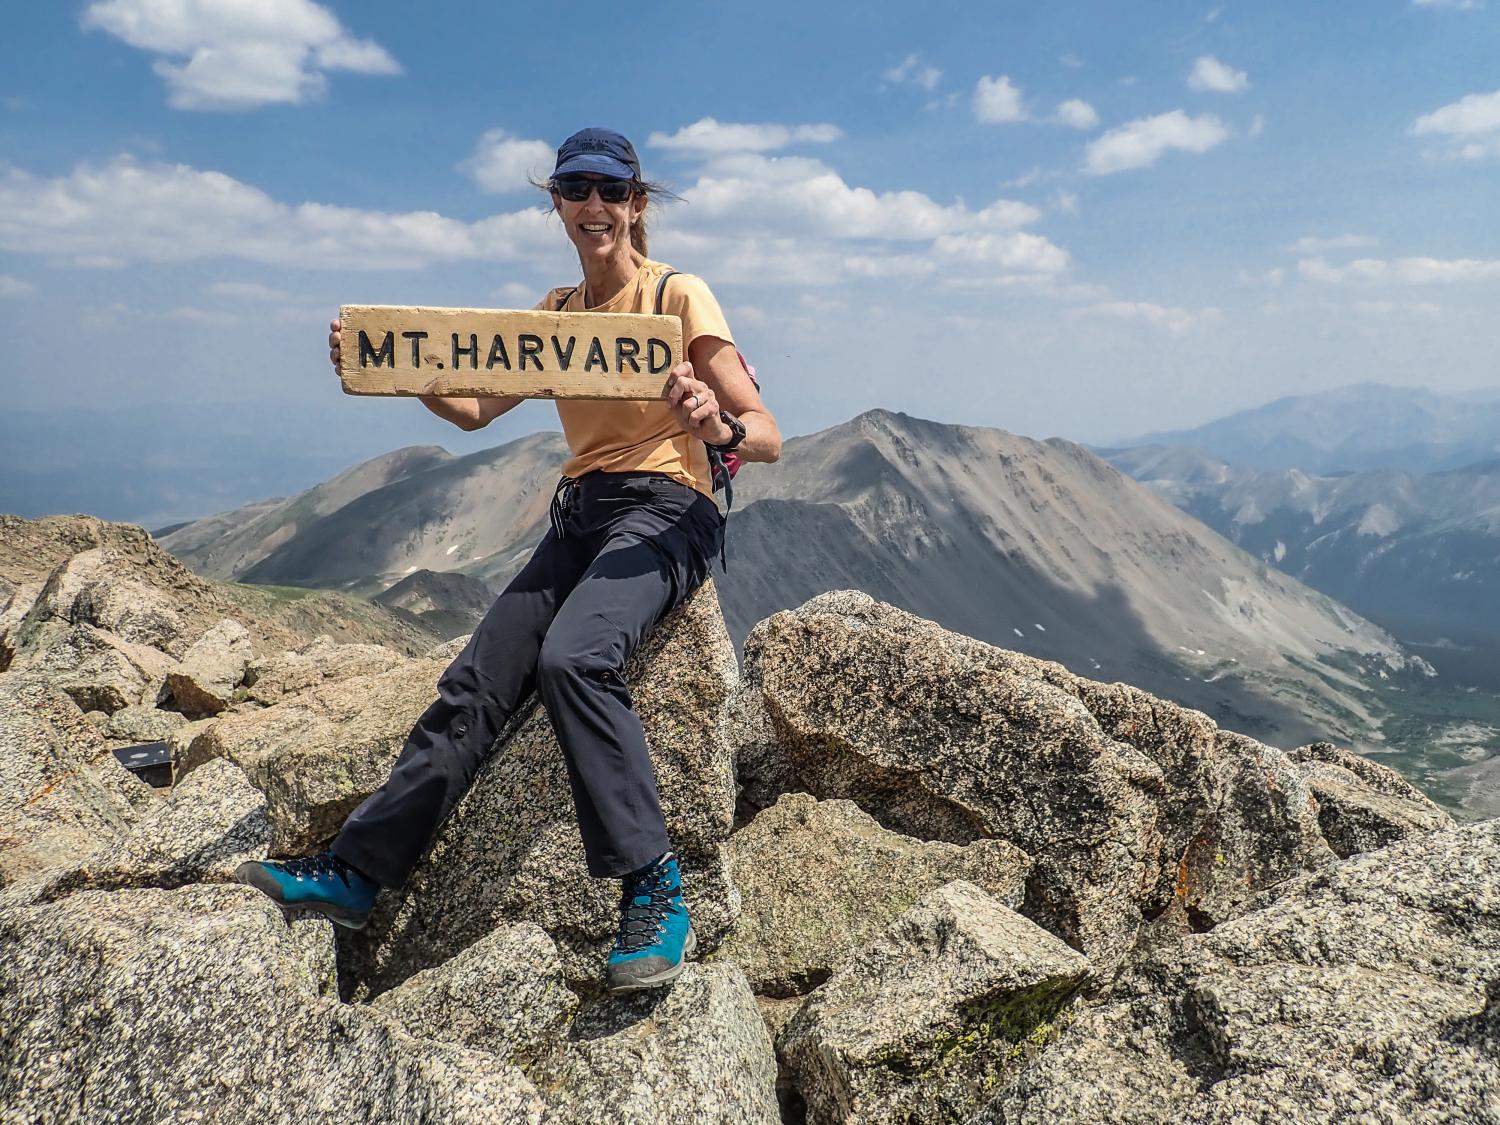 LOWA Ambassador Lisa Ballard holding a sign with "Mt. Harvard" written on it, standing at the summit of Mt. Harvard